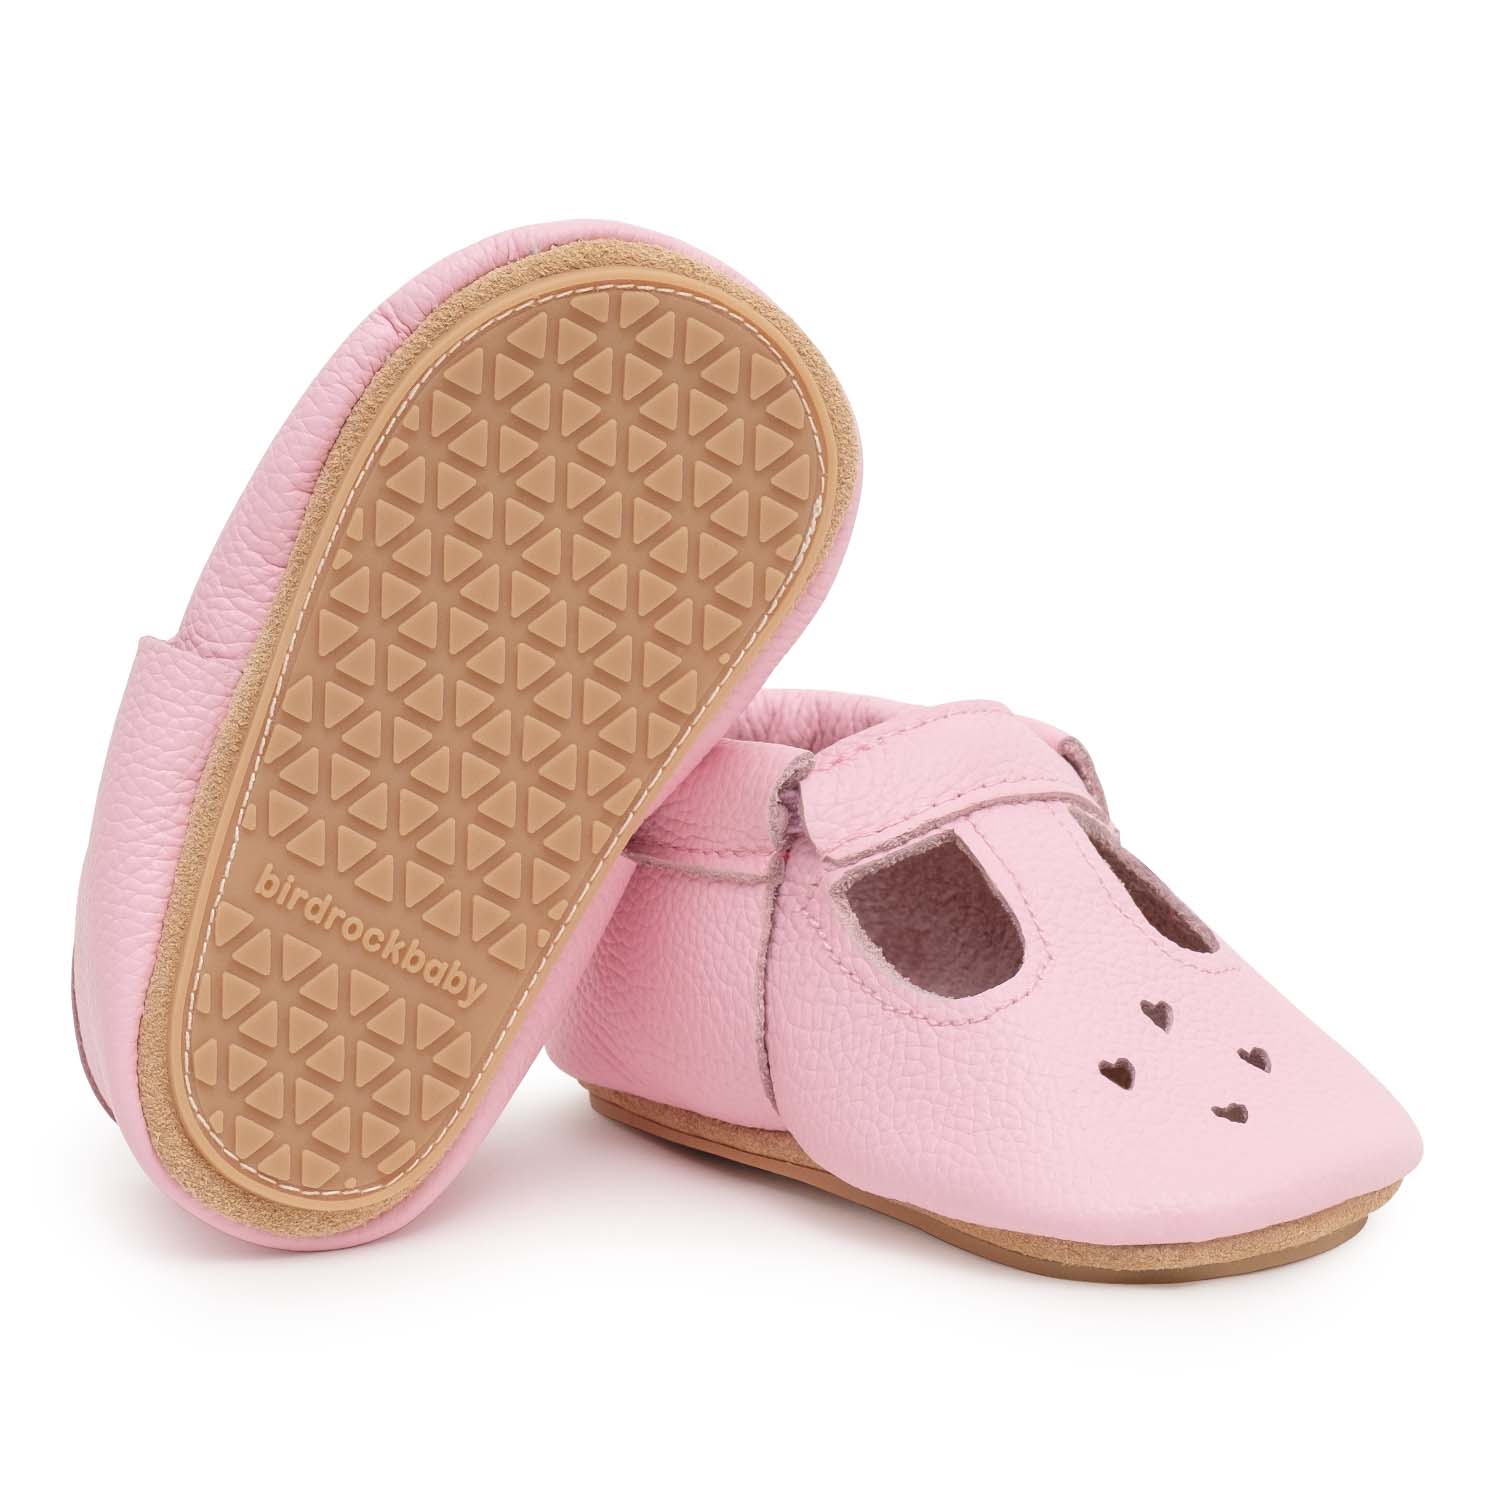 Pink Mary Jane Non Slip Socks 6pk – Elegant Baby